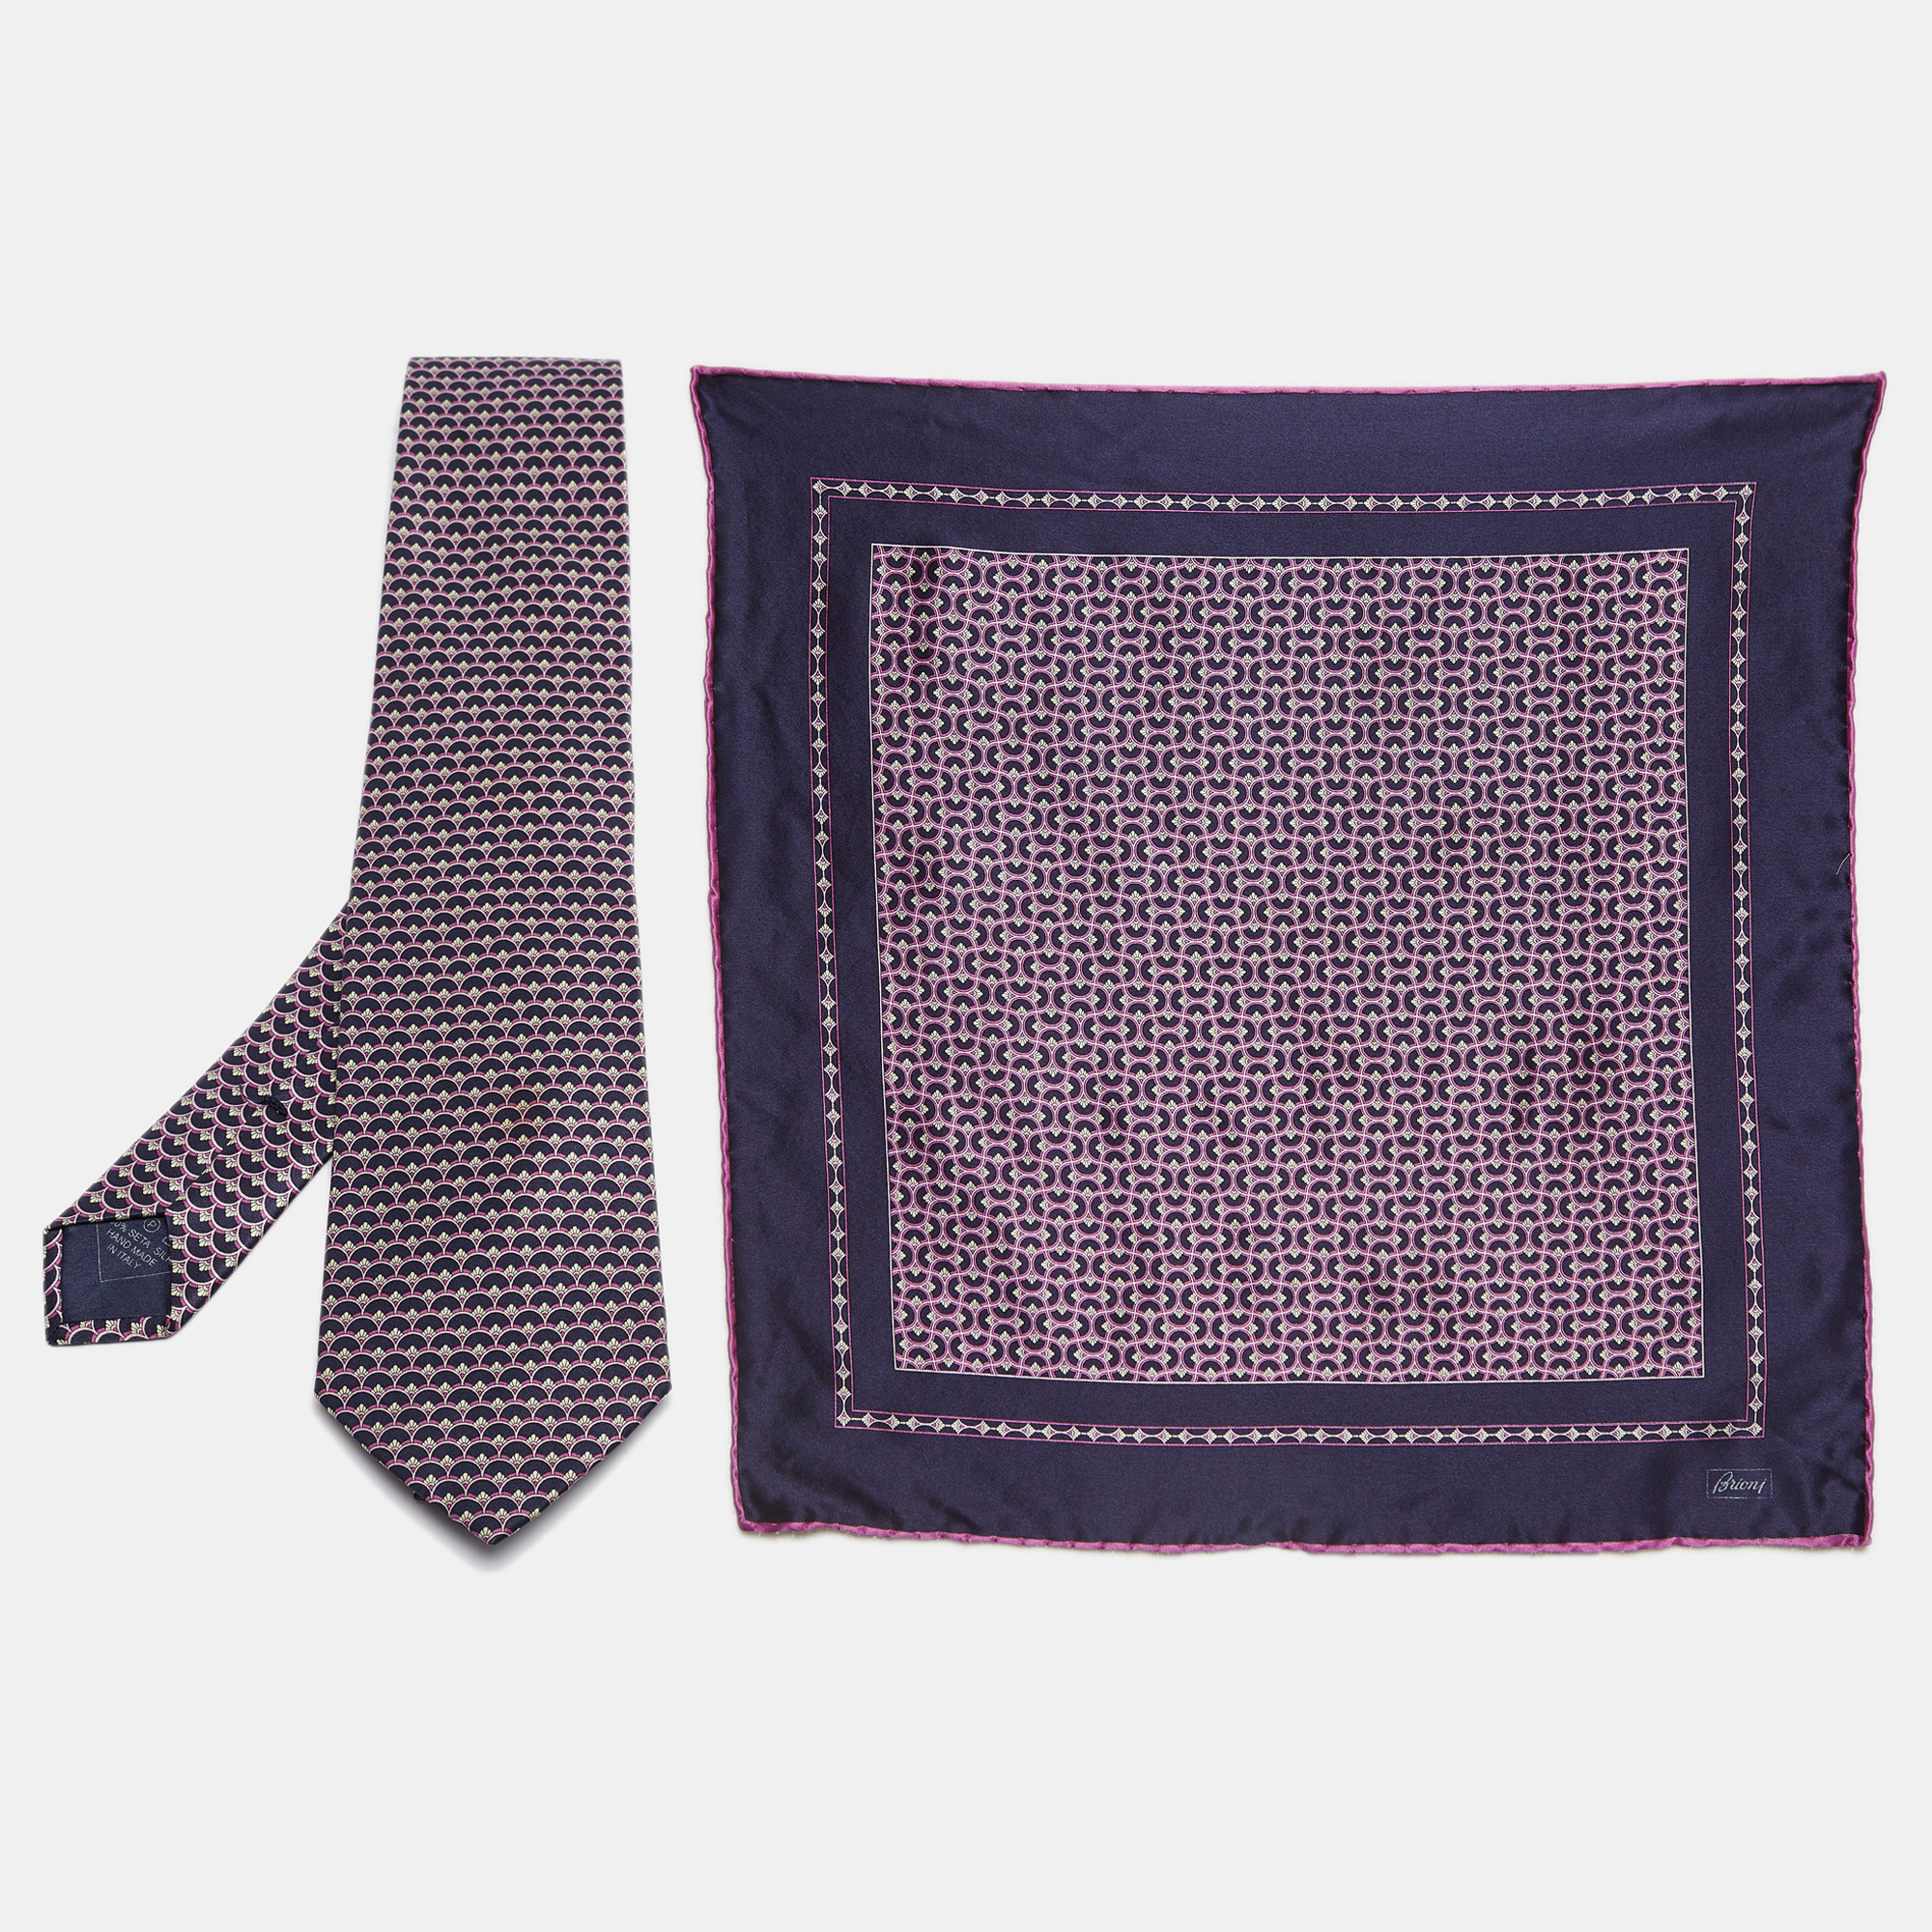 Brioni purple printed satin pocket square and tie